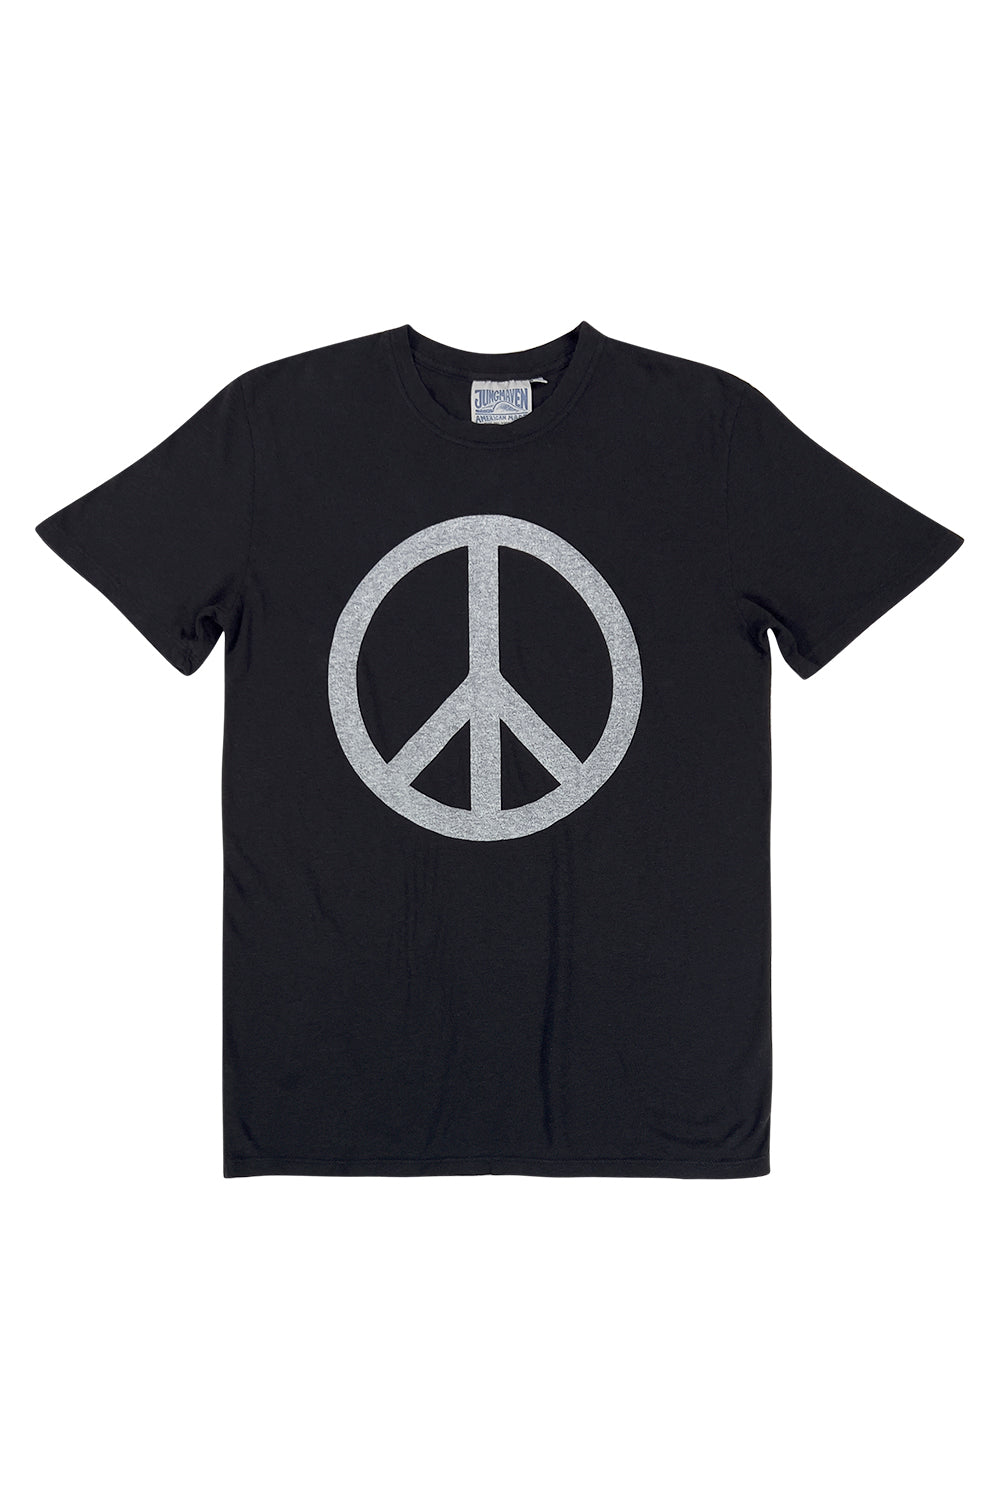 Peace Tee | Jungmaven Hemp Clothing & Accessories / Color: Black